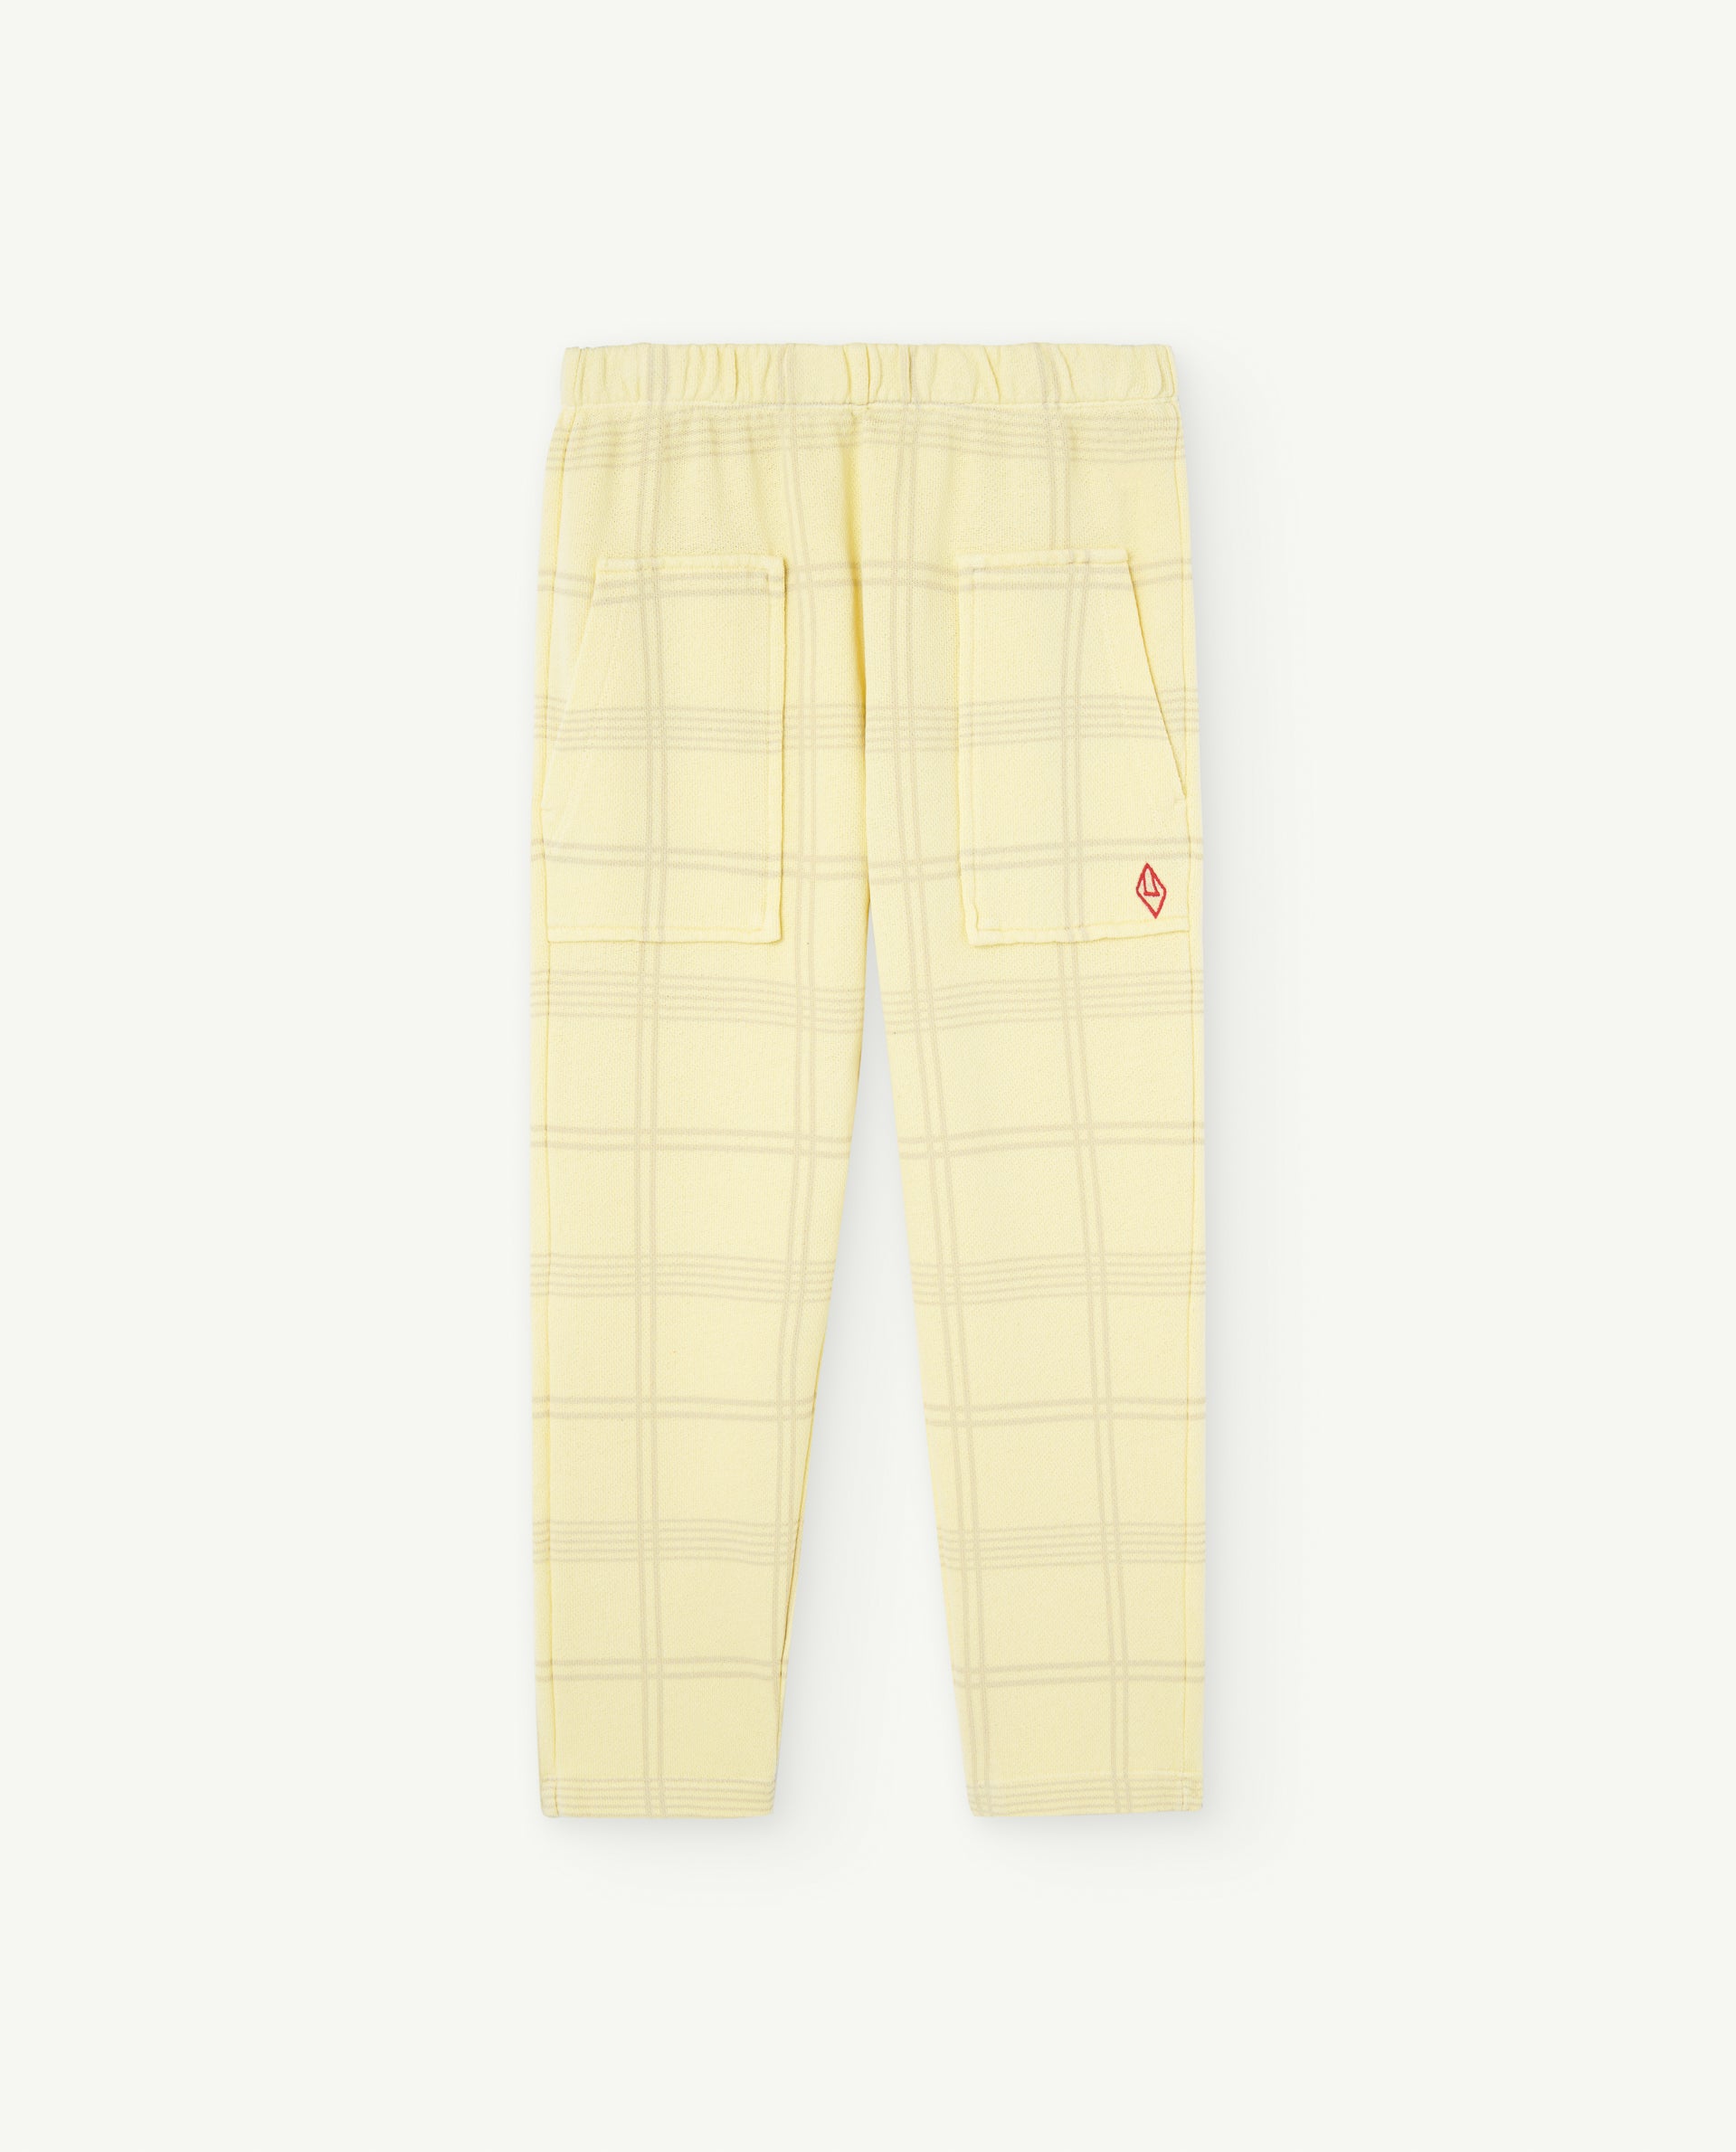 Soft Yellow Horse Sweatpants